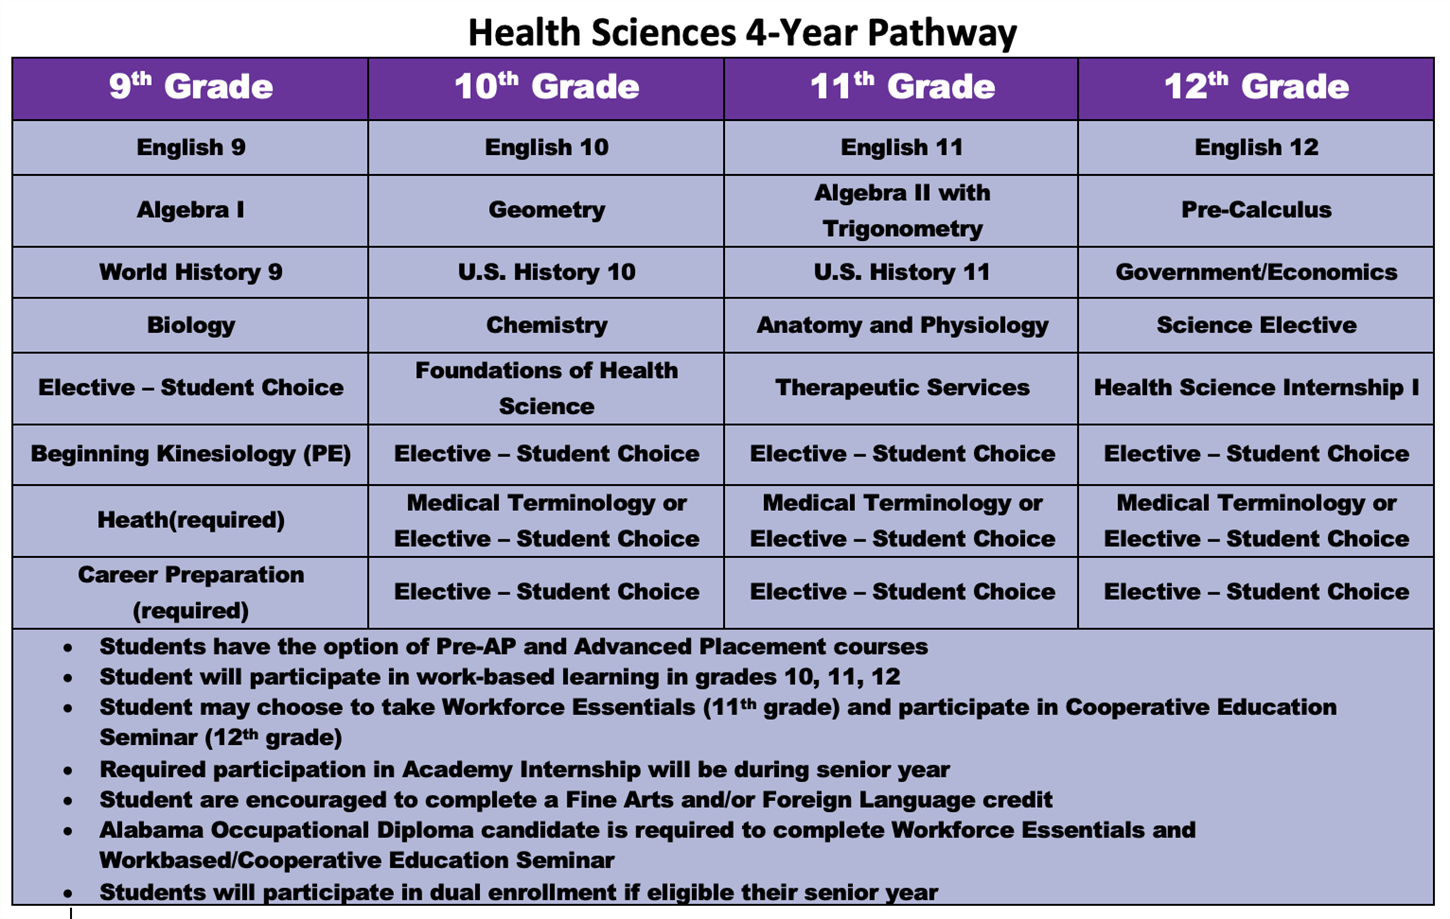 Health Sciences 4 year pathway